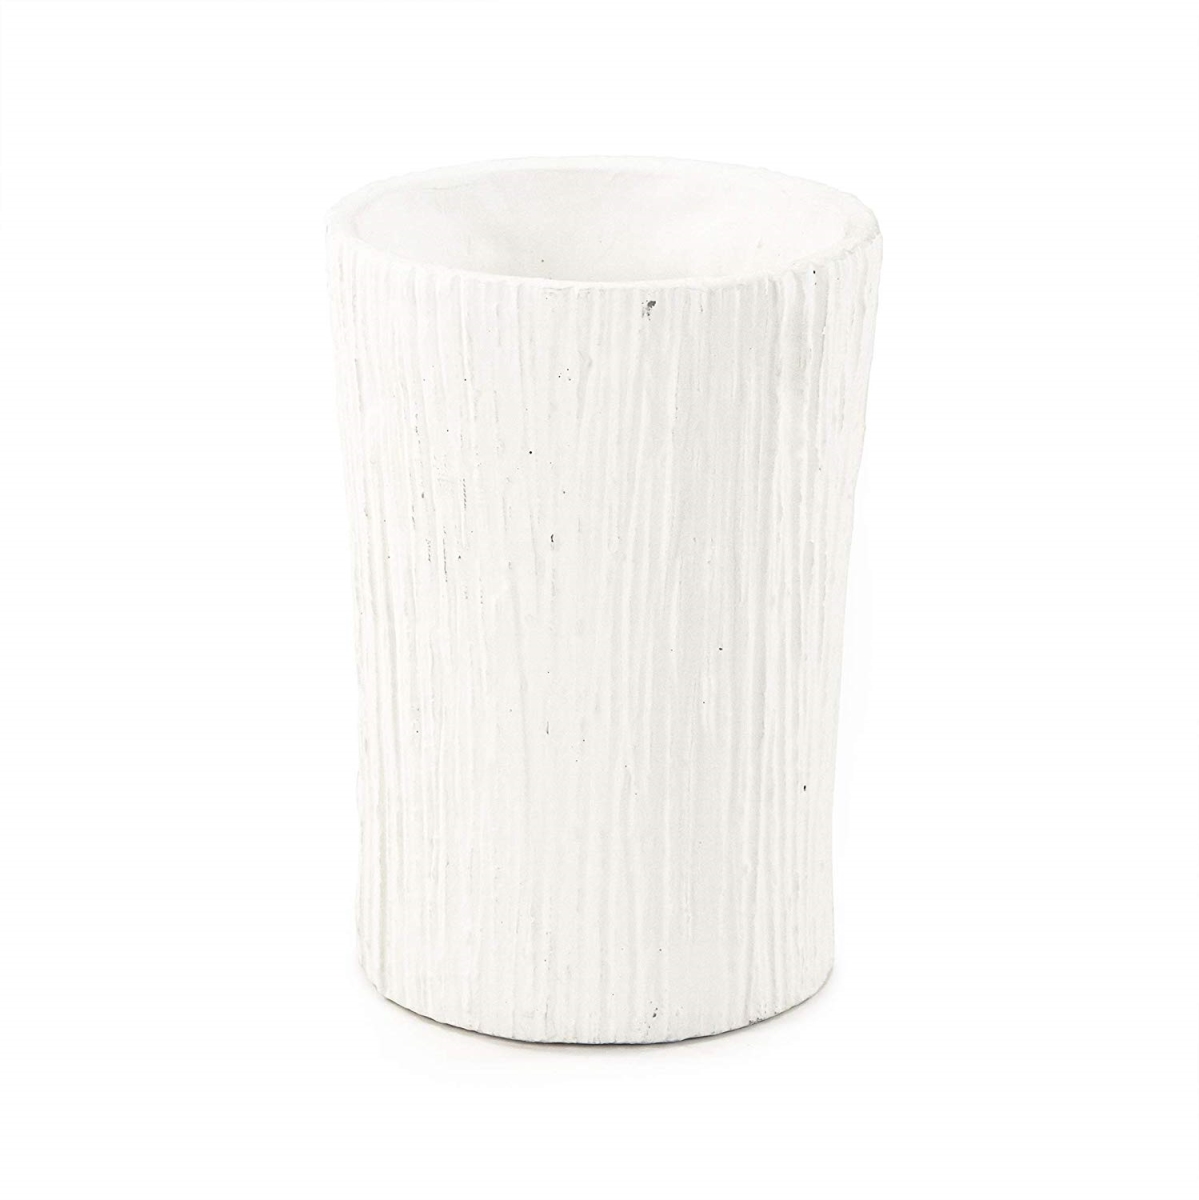 10043l A148 Distressed Vase, Large - White